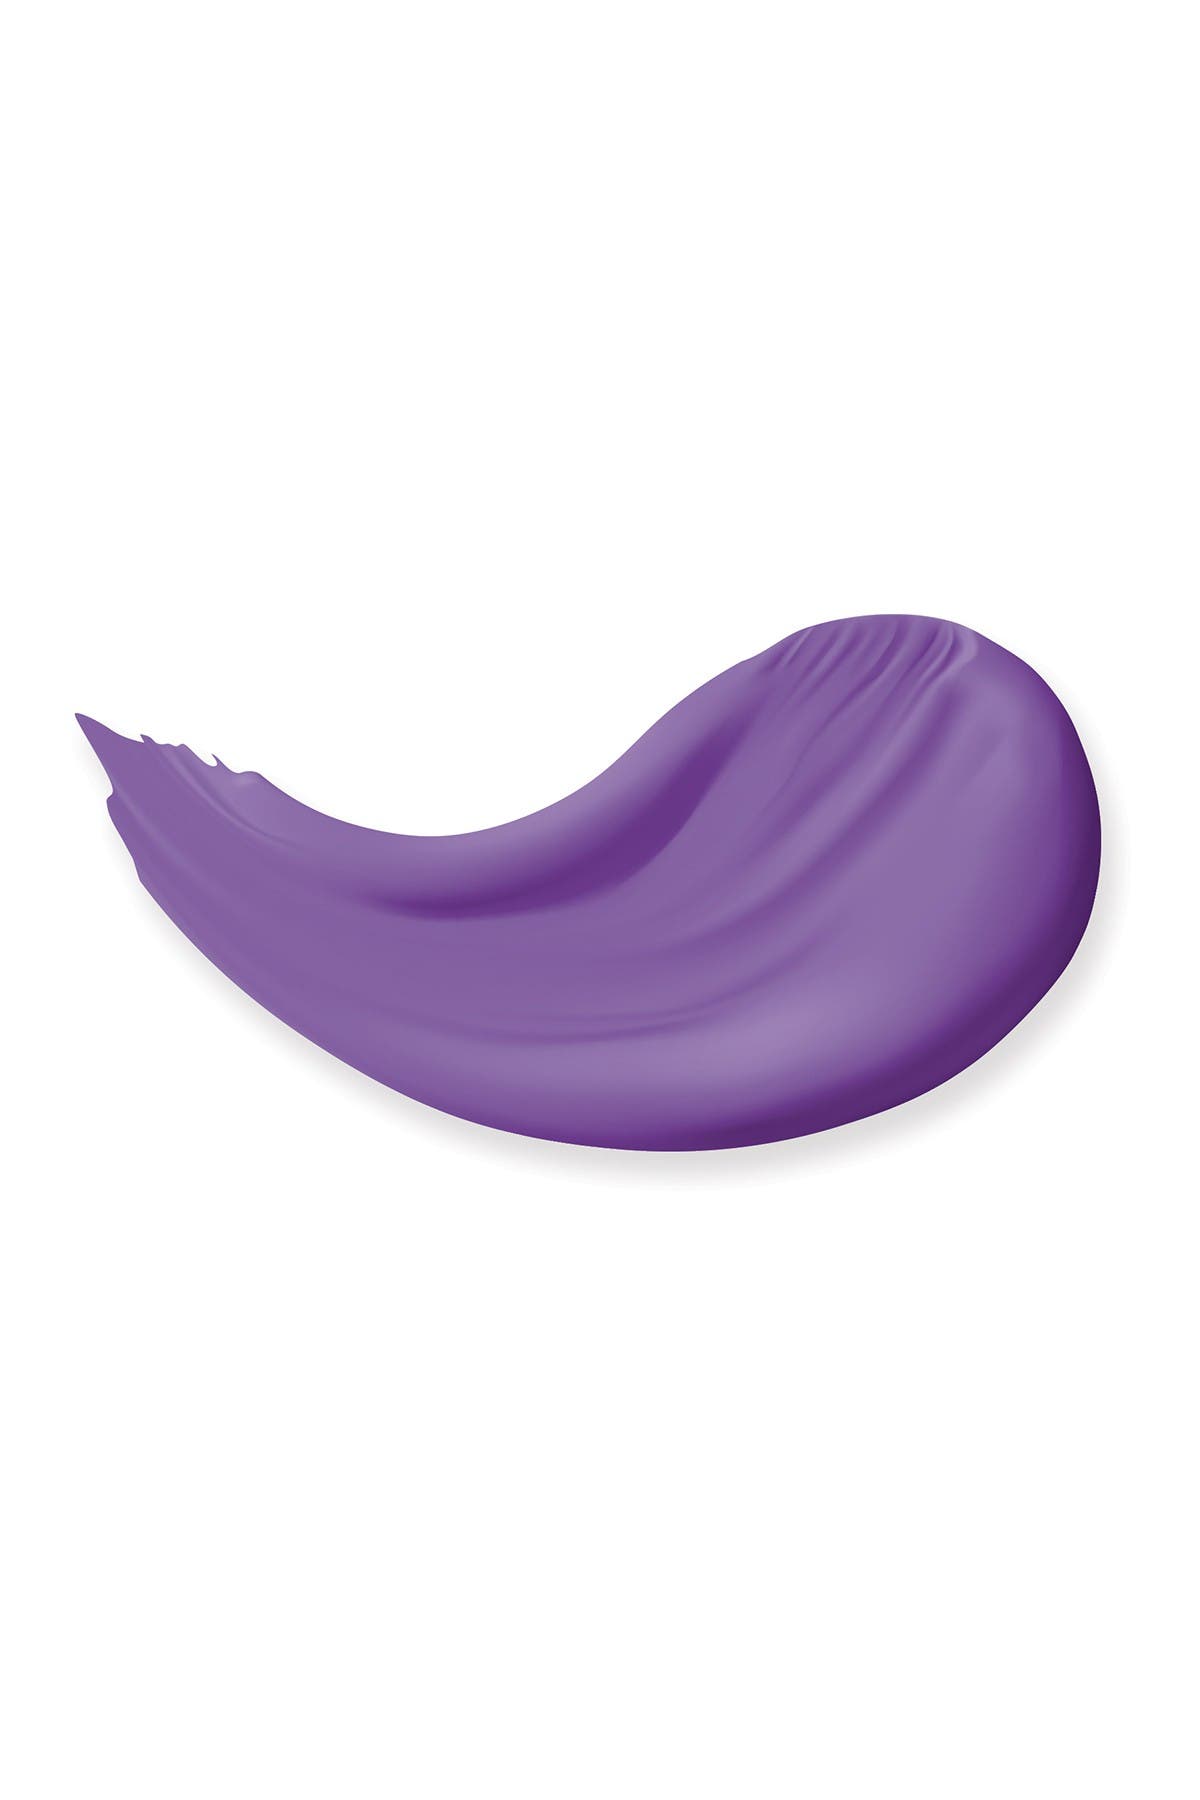 Brite 100ml Instant Color Semi-permanent Hair Dye In Purple